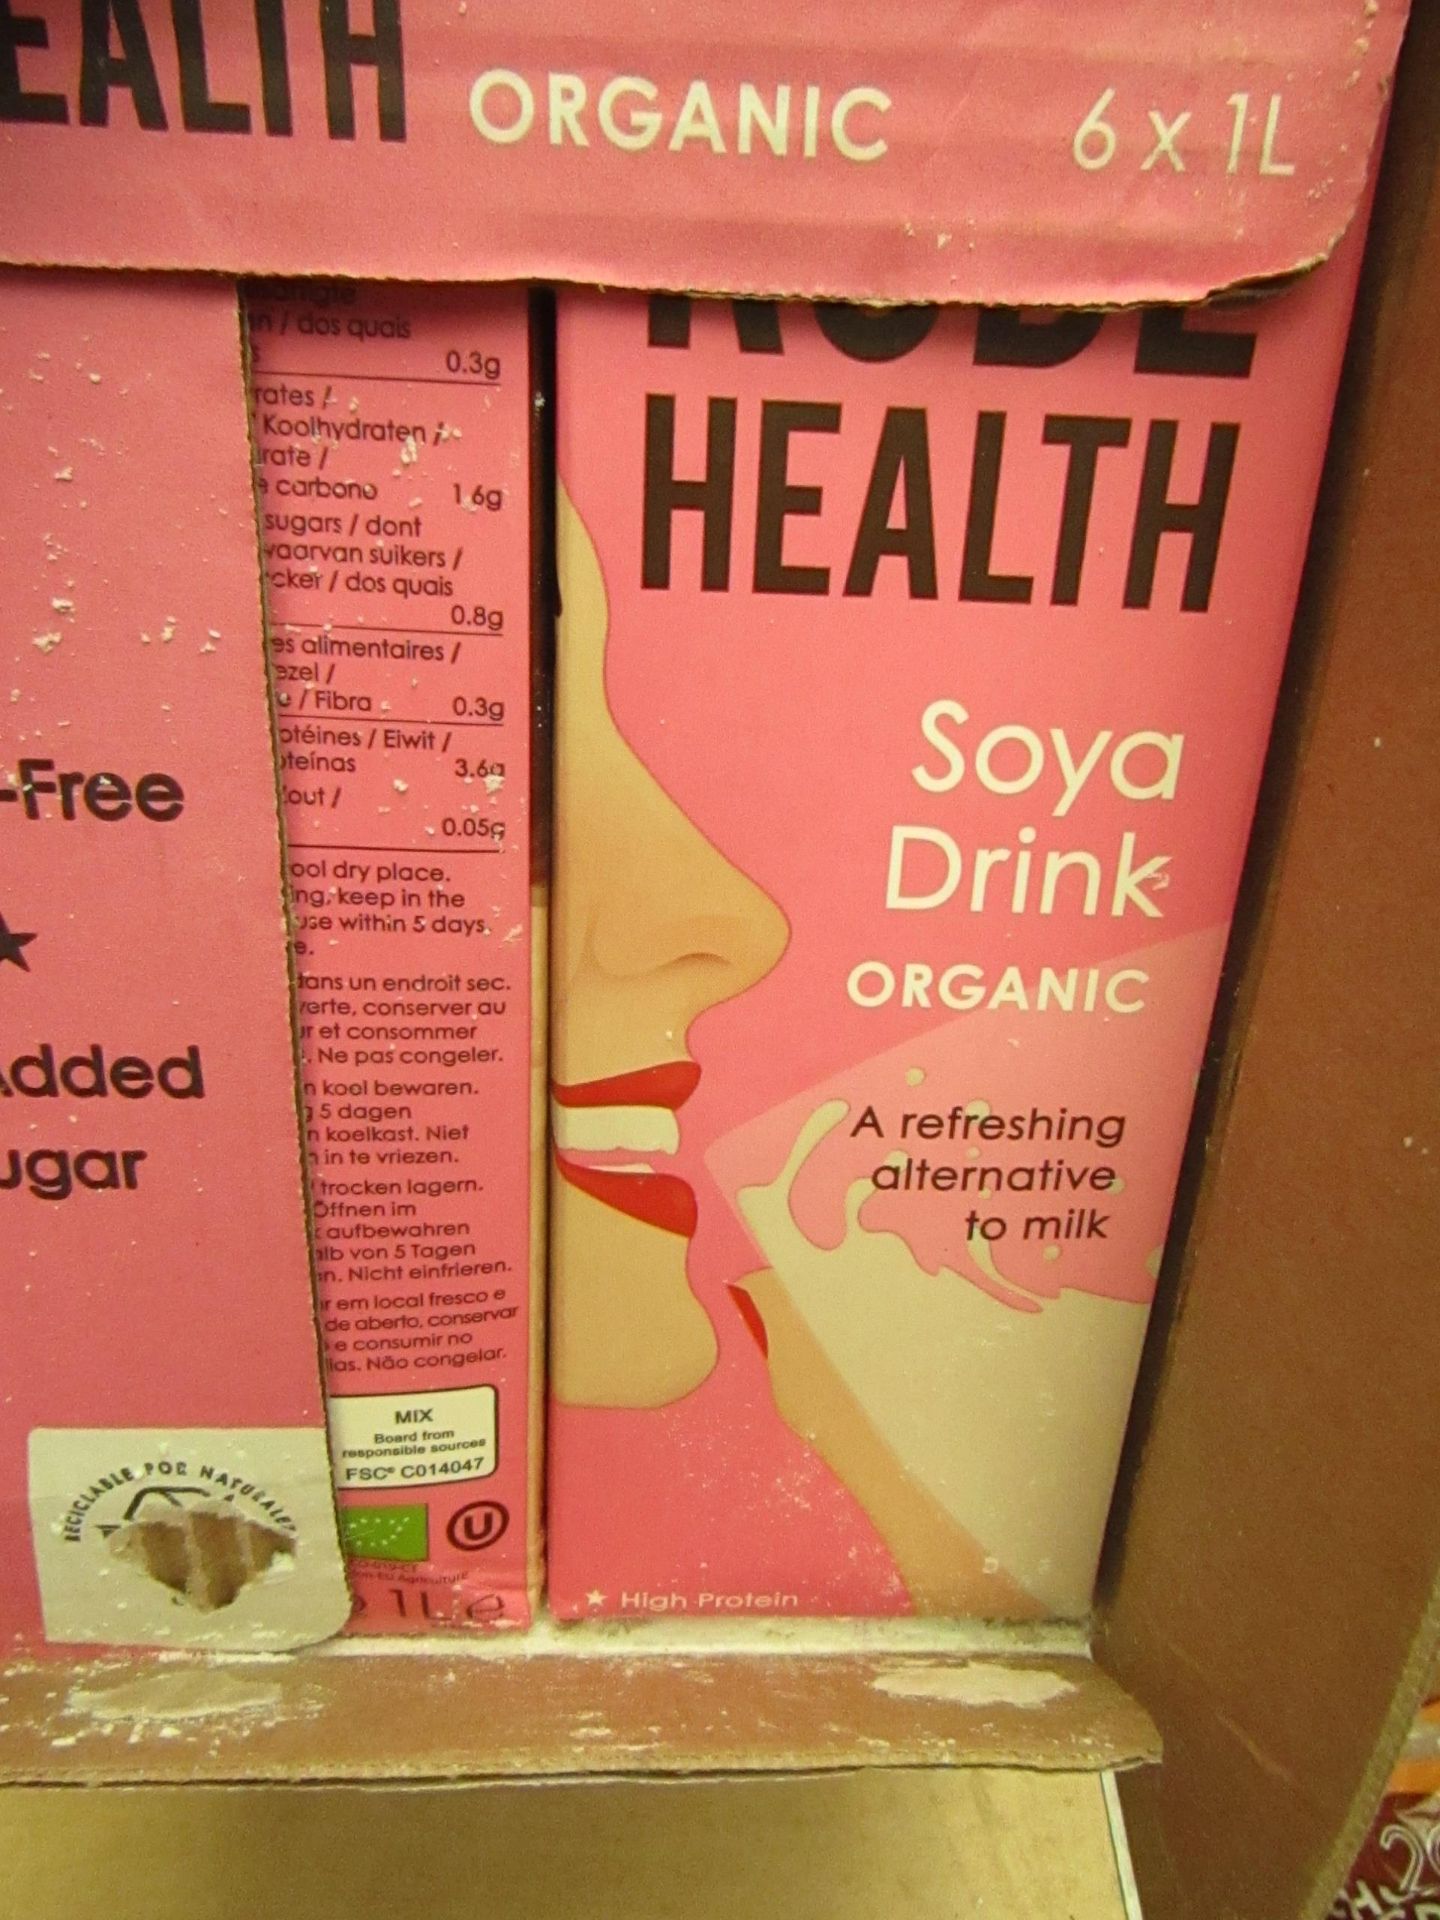 6x Rude Health - Soya Drink Organic (Gluten Free) - 1 Litre - BB2021.